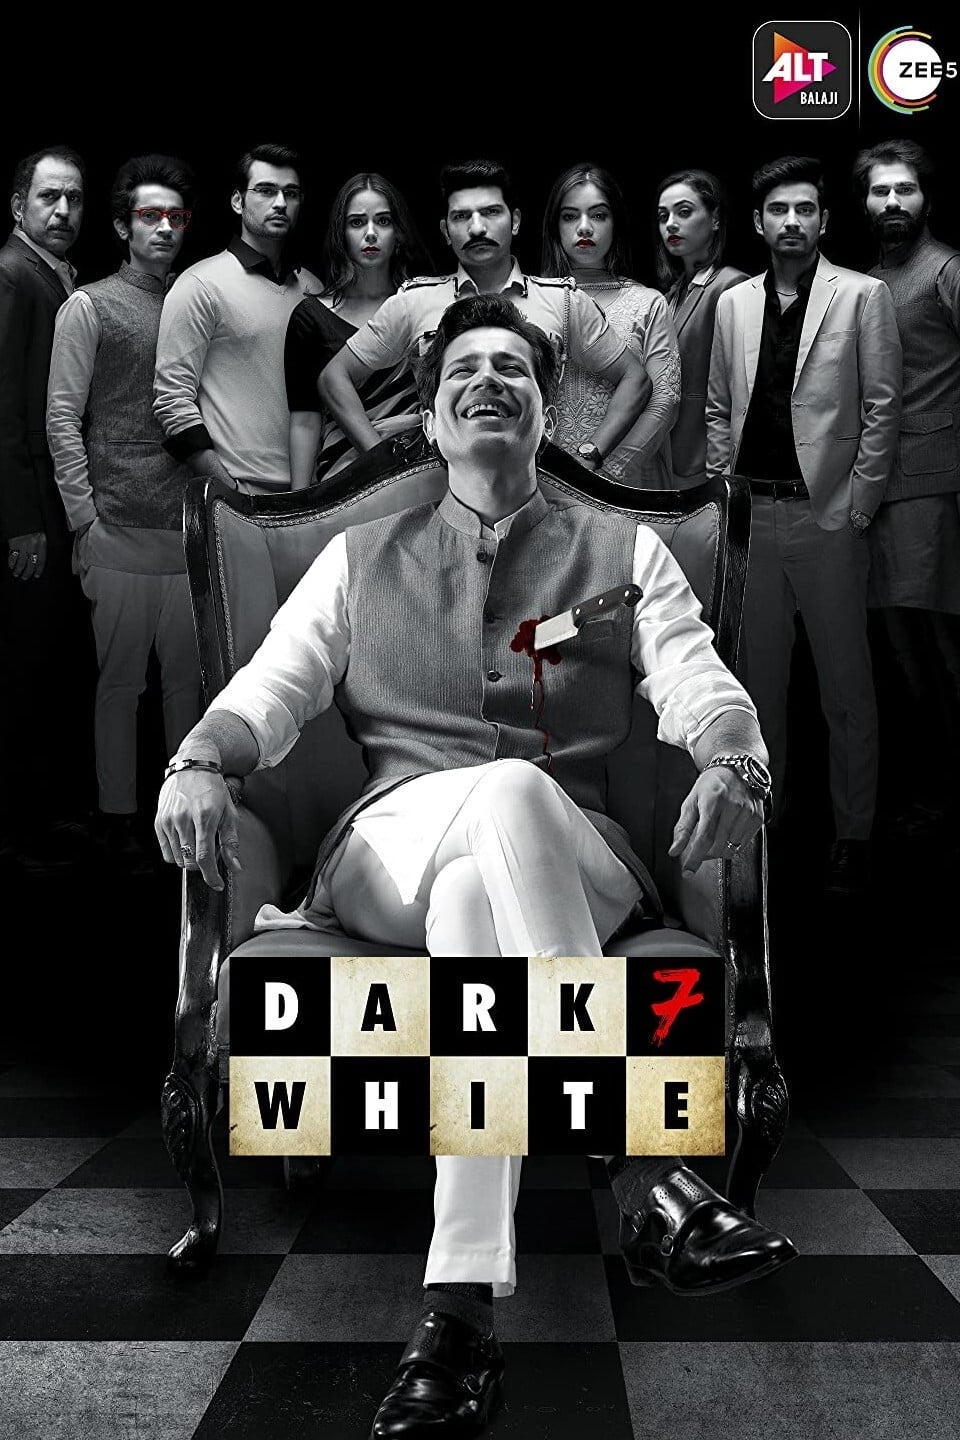 Dark 7 White (2020) Hindi Season 1 Complete Altbalaji Watch Online in HD